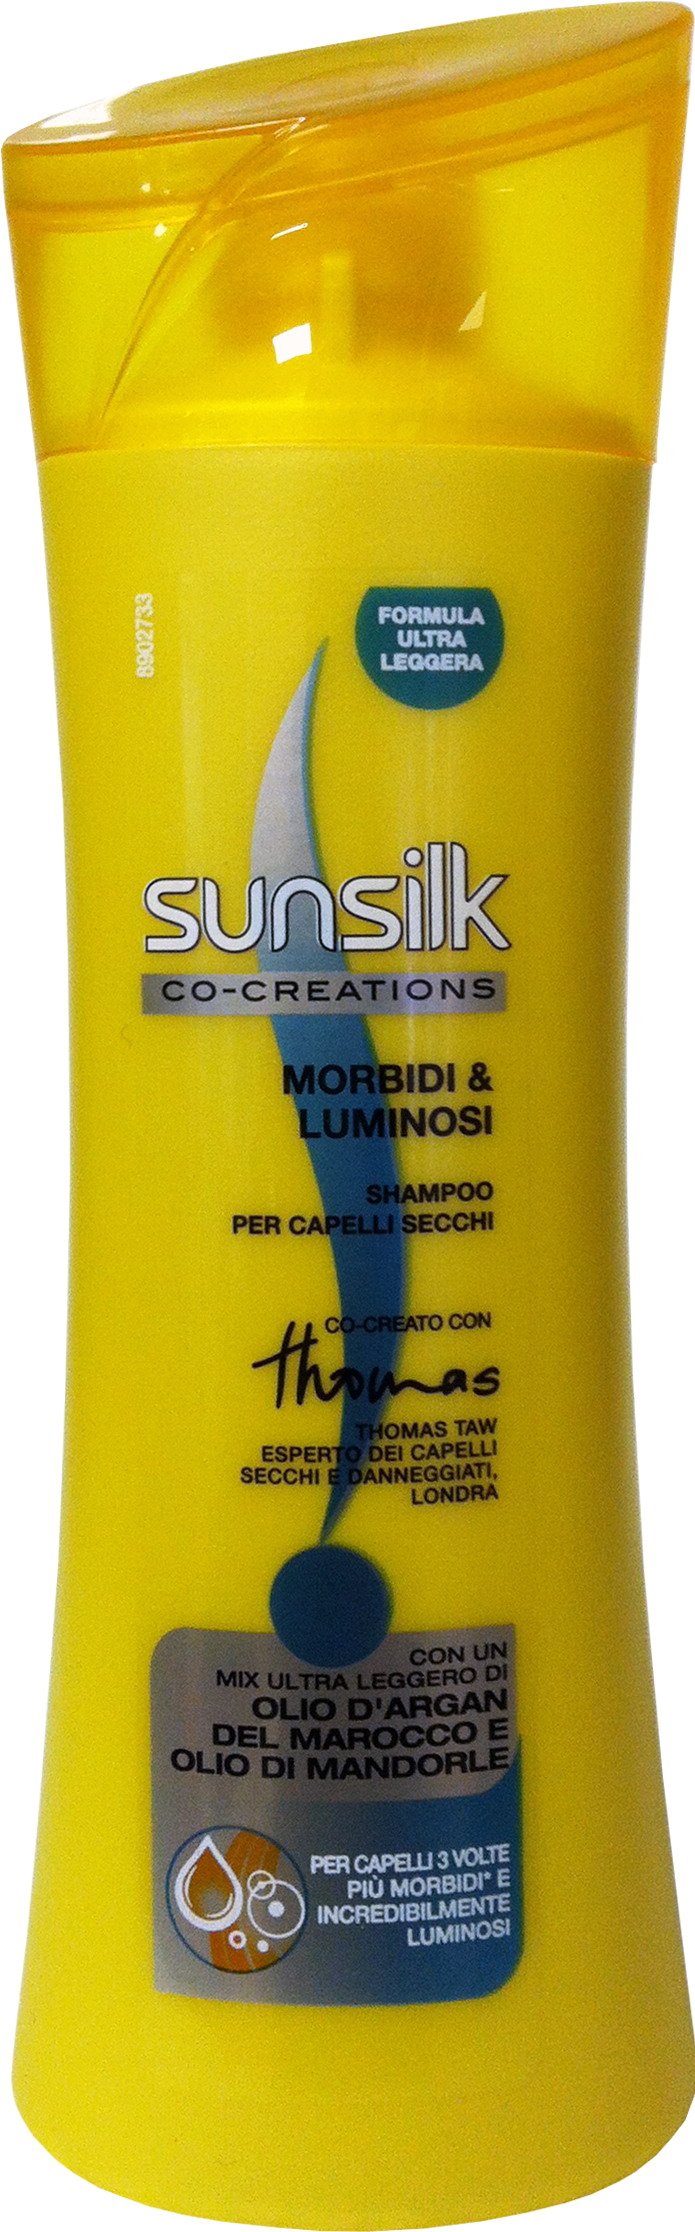 Sunsilk shampoo morbidi e luminosi ml.250